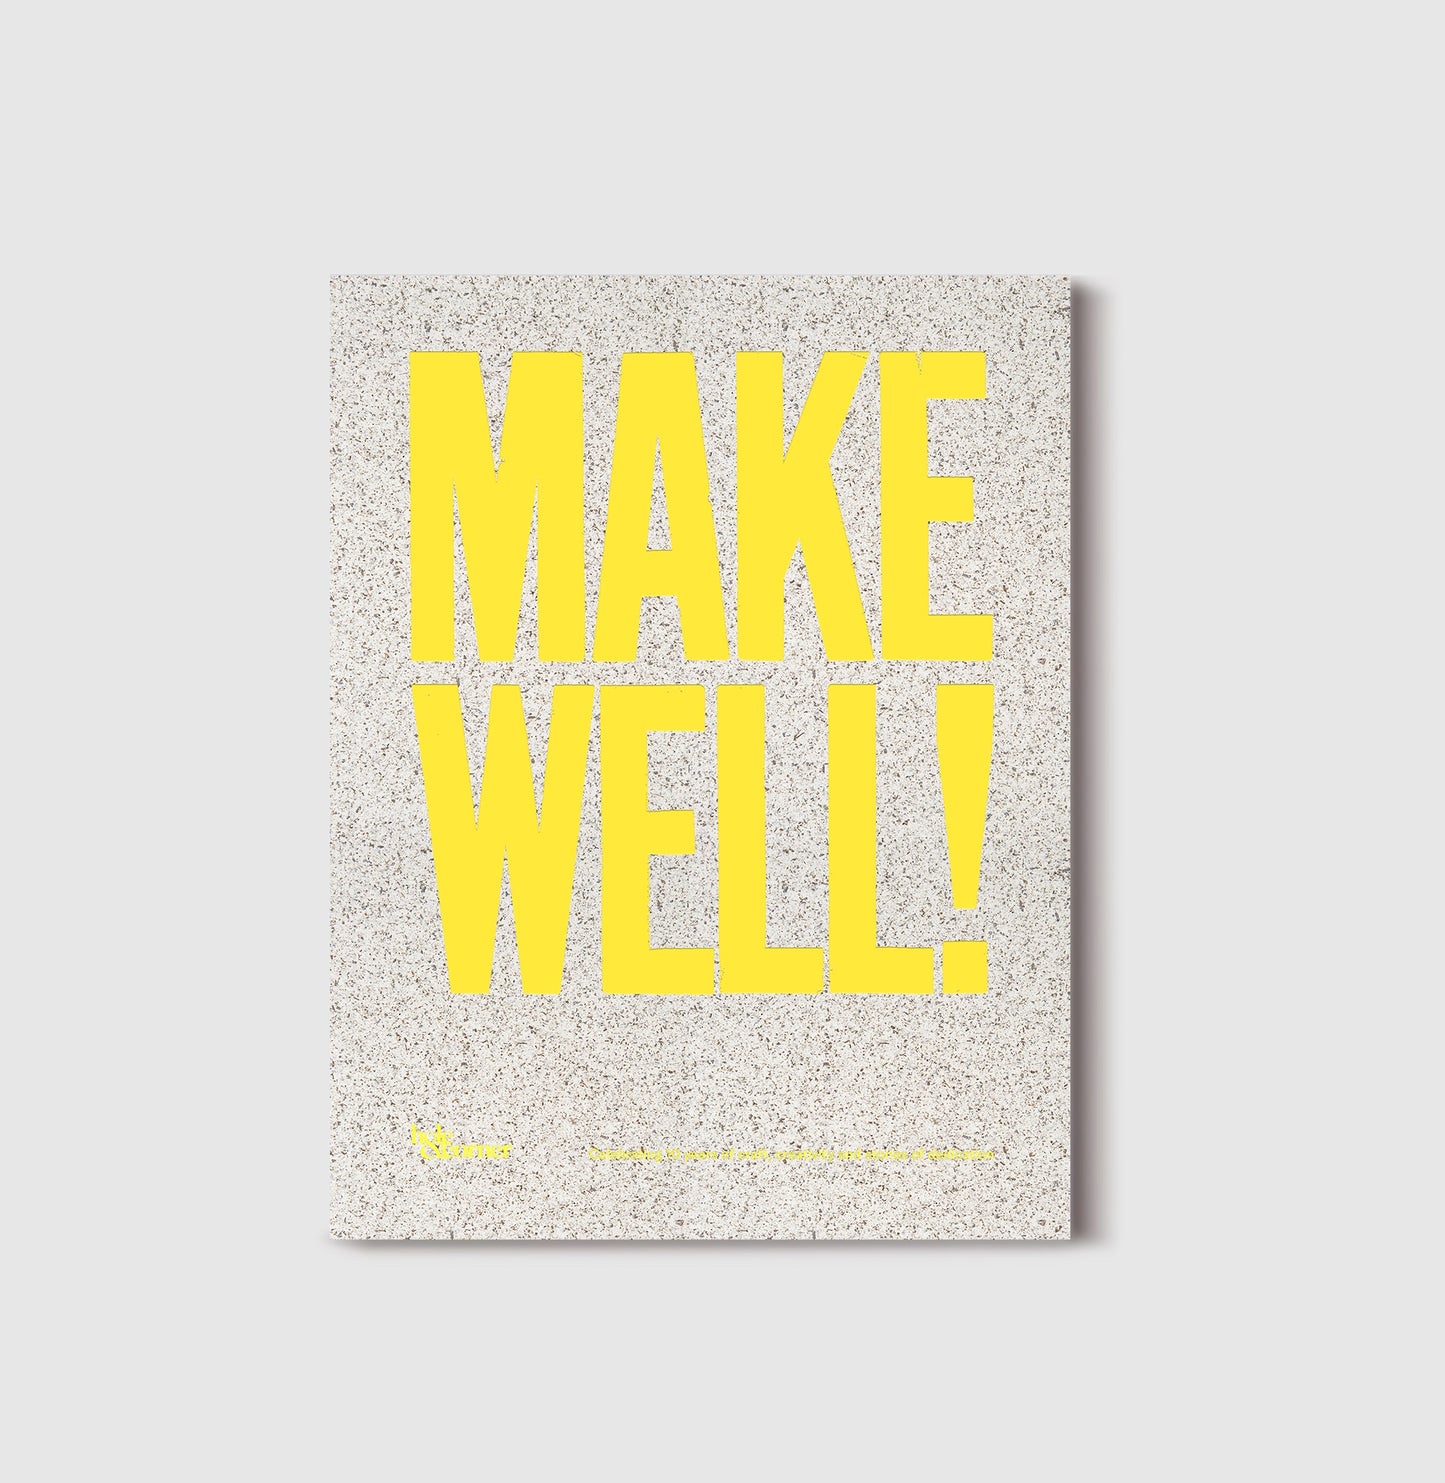 Make Well